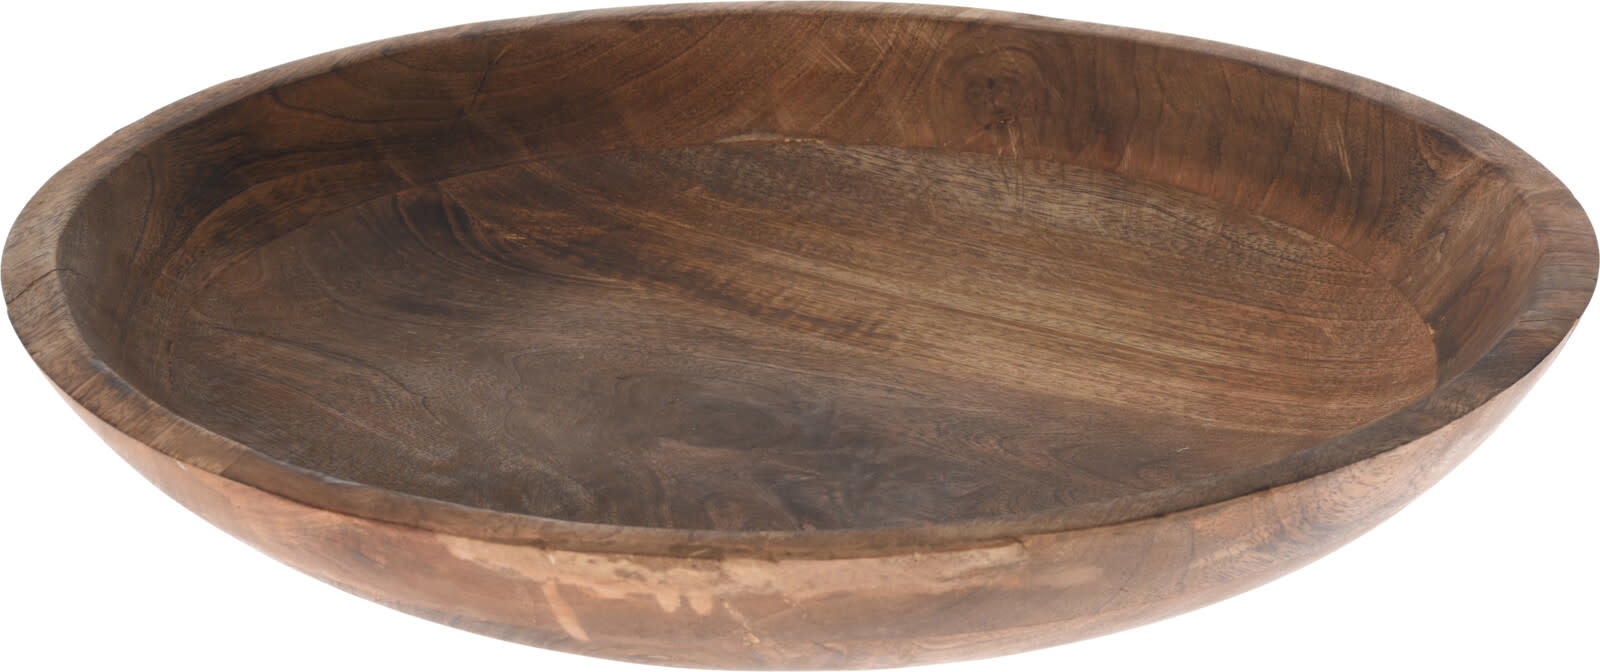 Koopman Bowl Mango Wood 40X7Cm